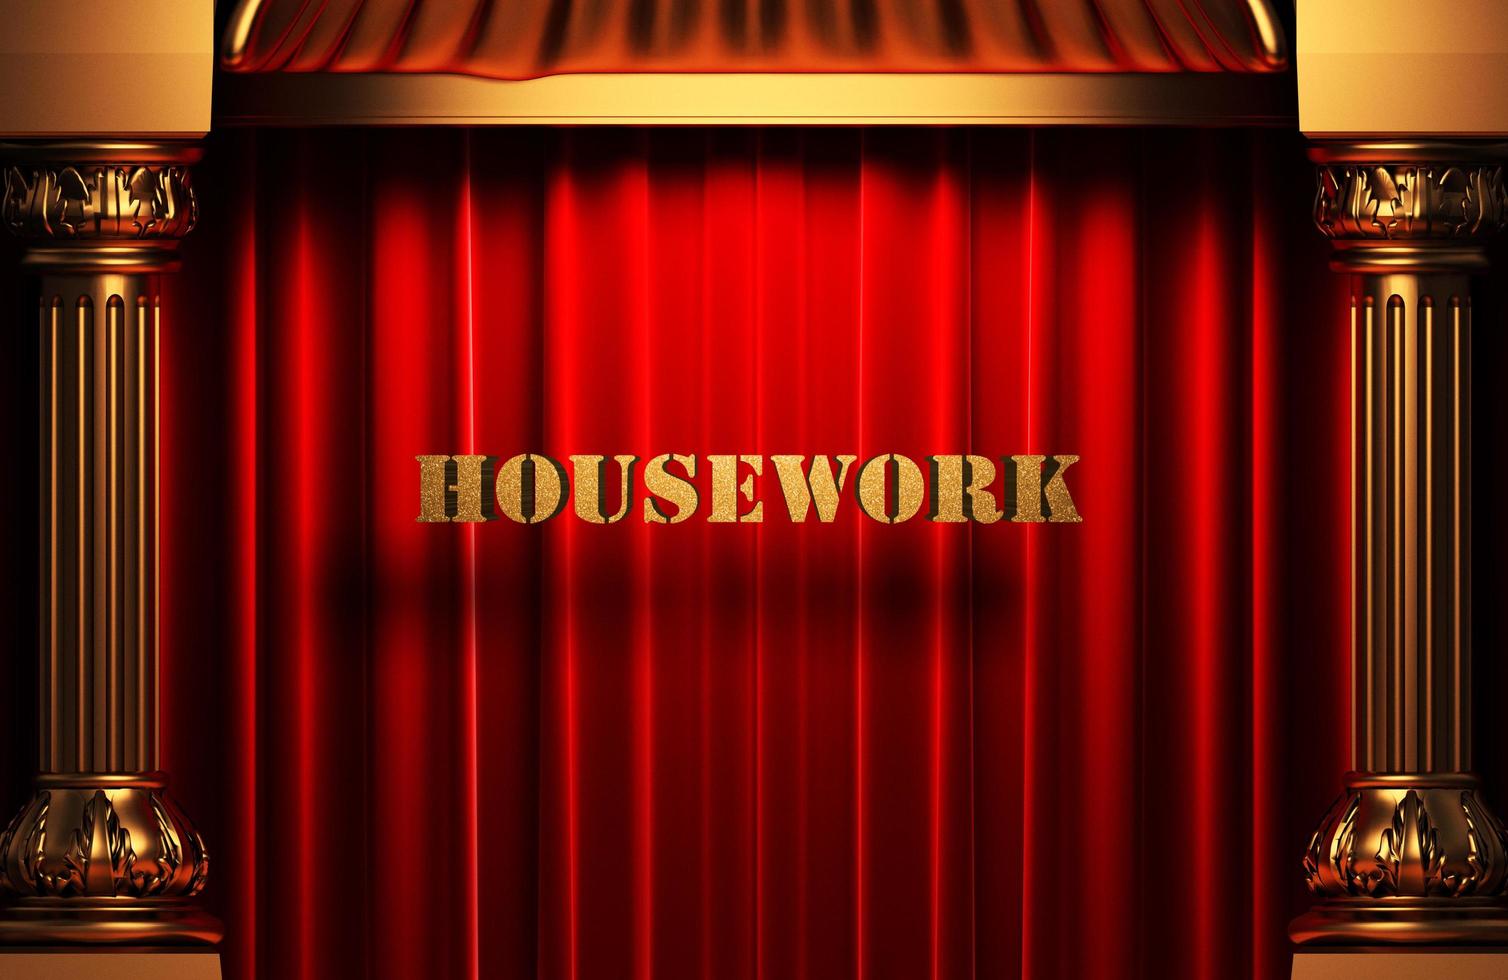 palabra dorada de tareas domésticas en cortina roja foto